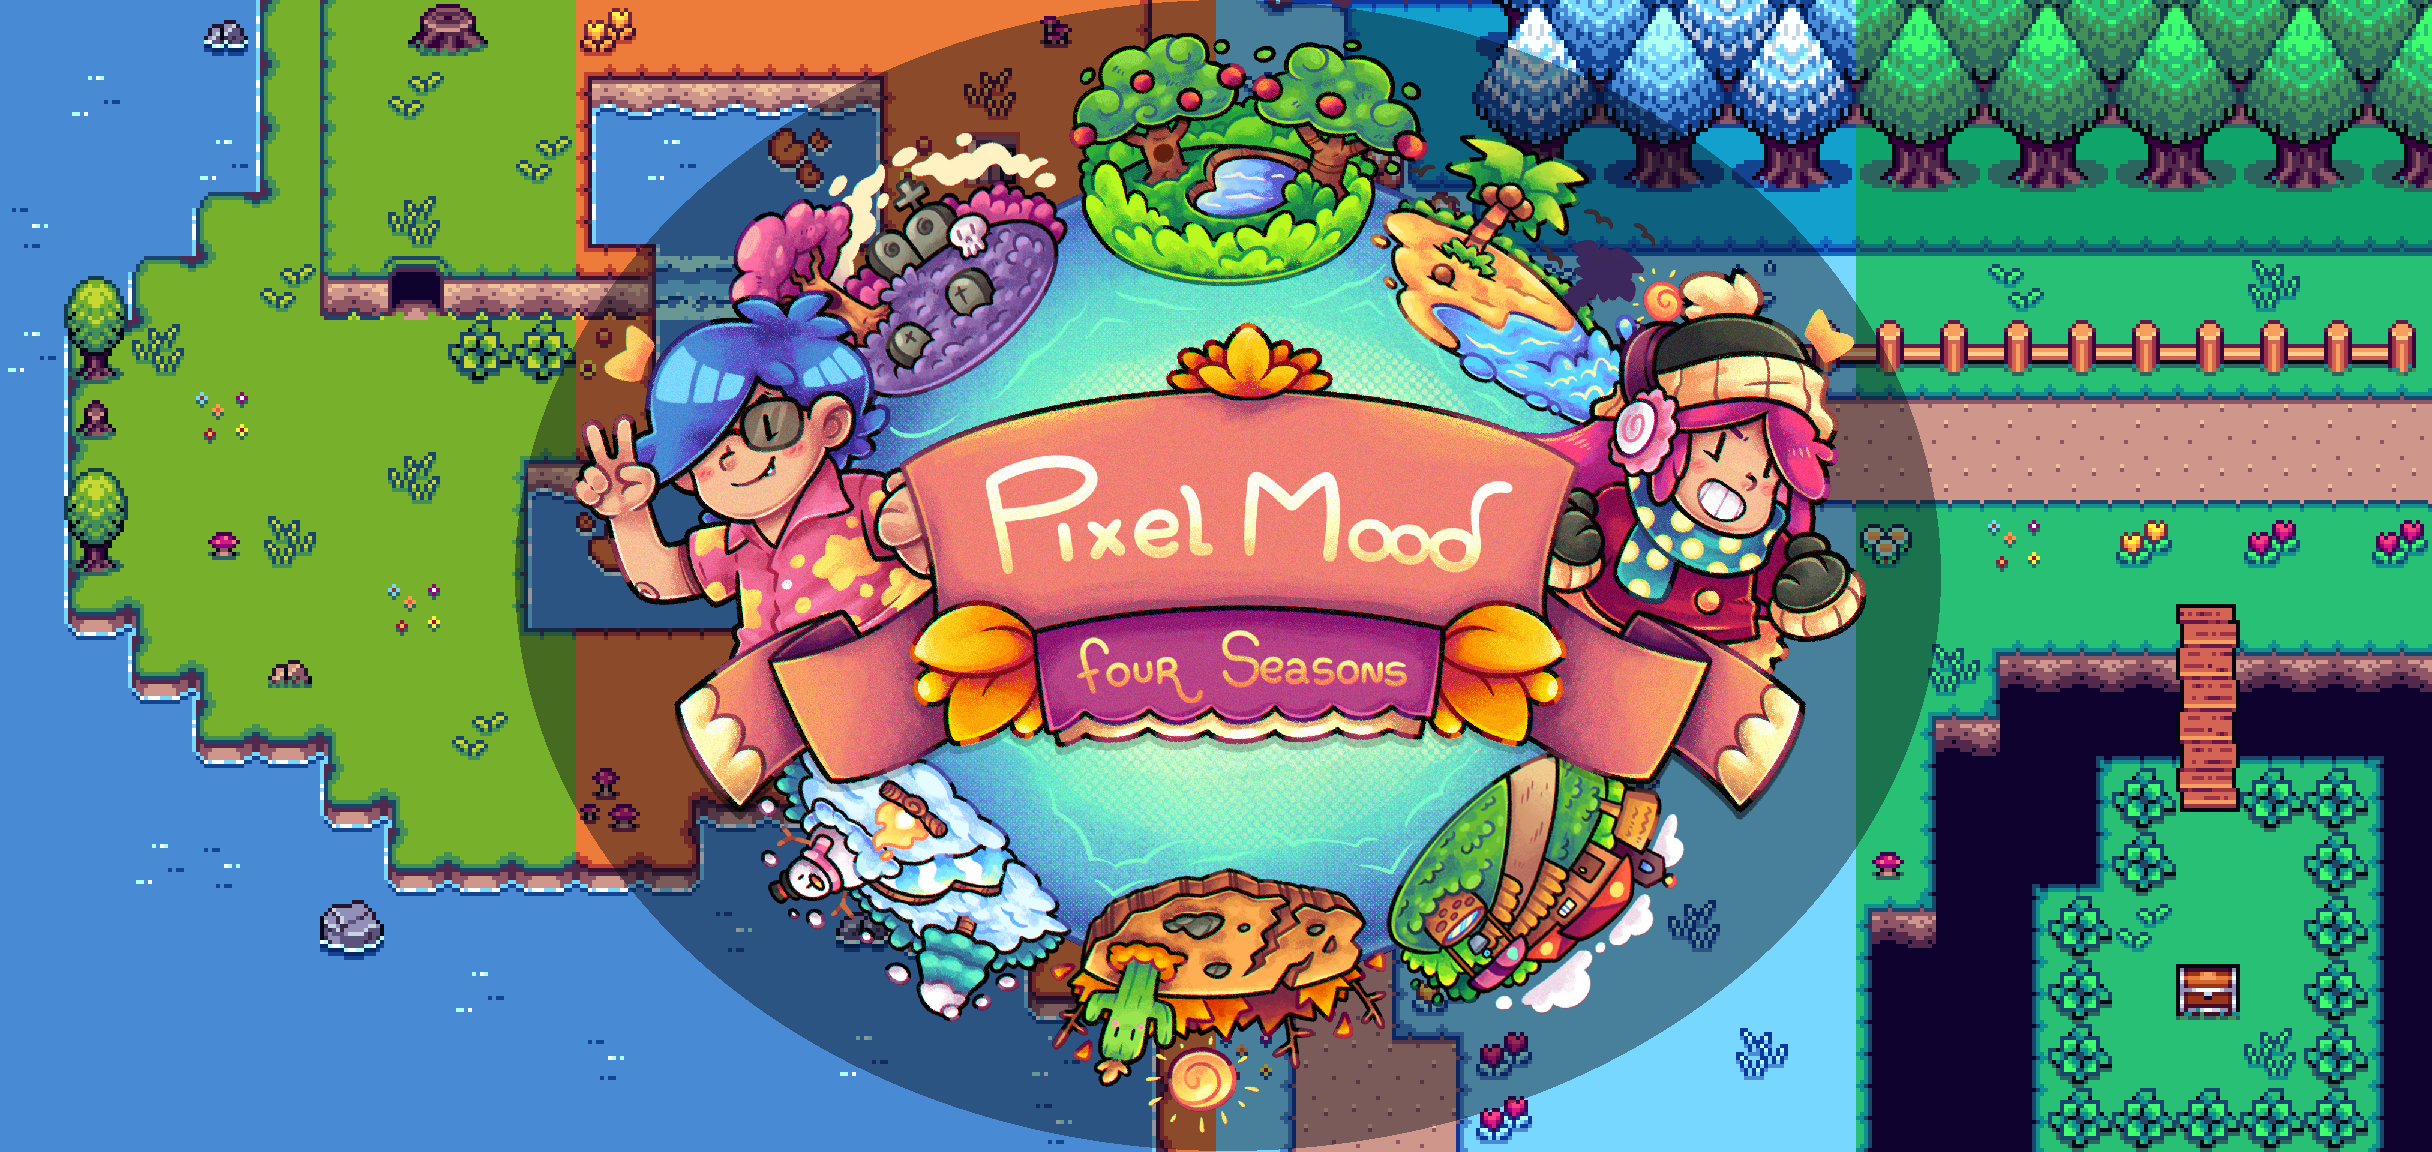 Pixel Mood - Four Seasons